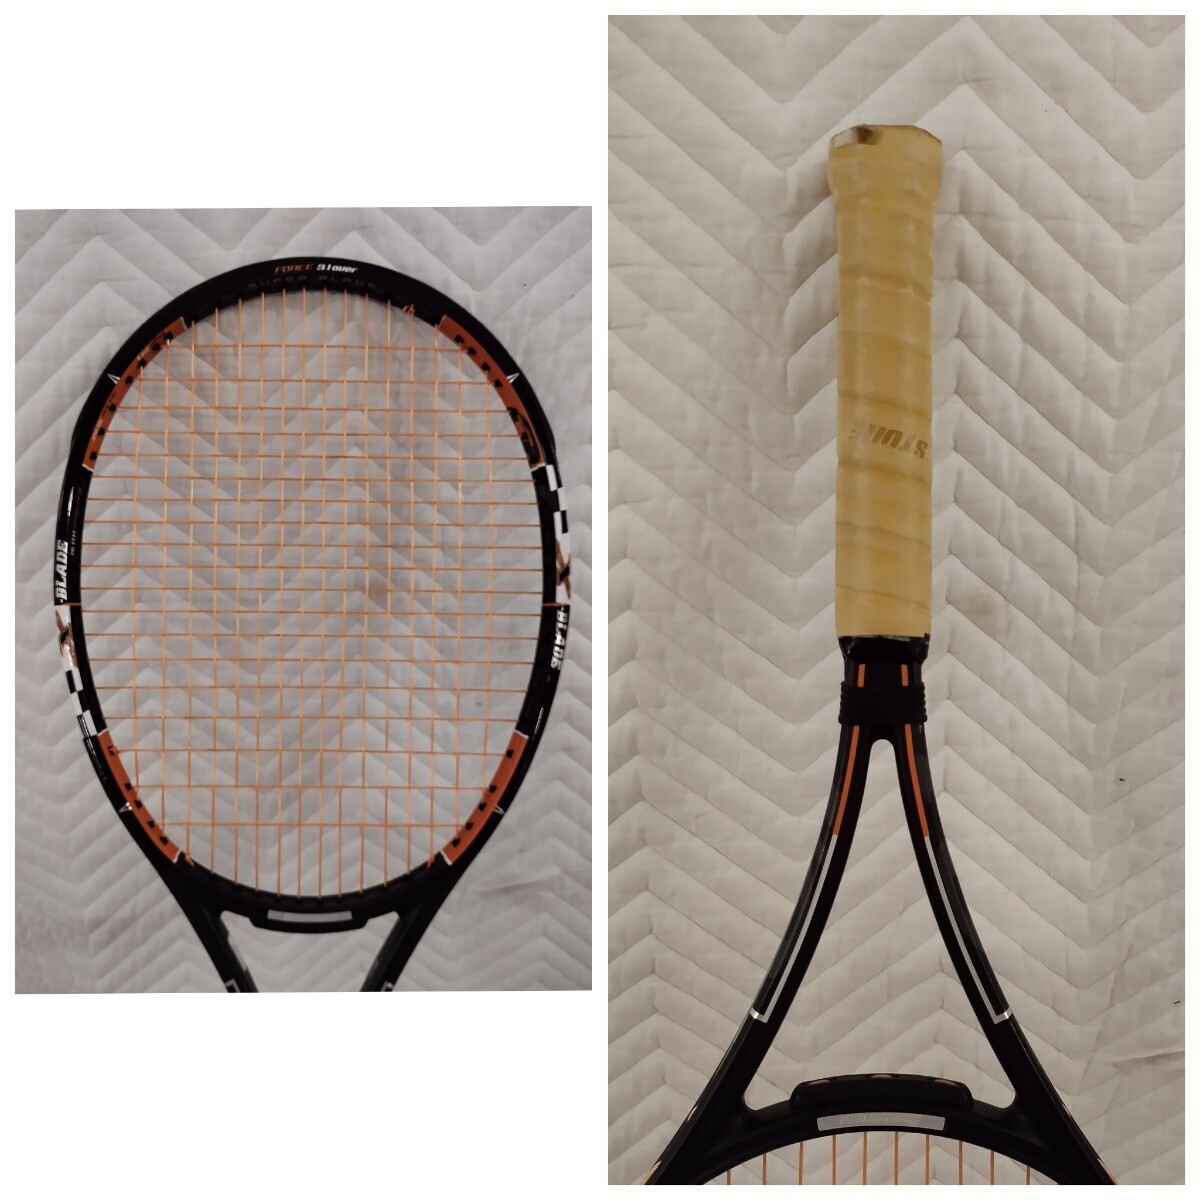 NR1021 tennis racket YONEX racket Yonex PRINCE Prince BRIDGESTONE Bridgestone Daiwa Daiwa 3 point set 